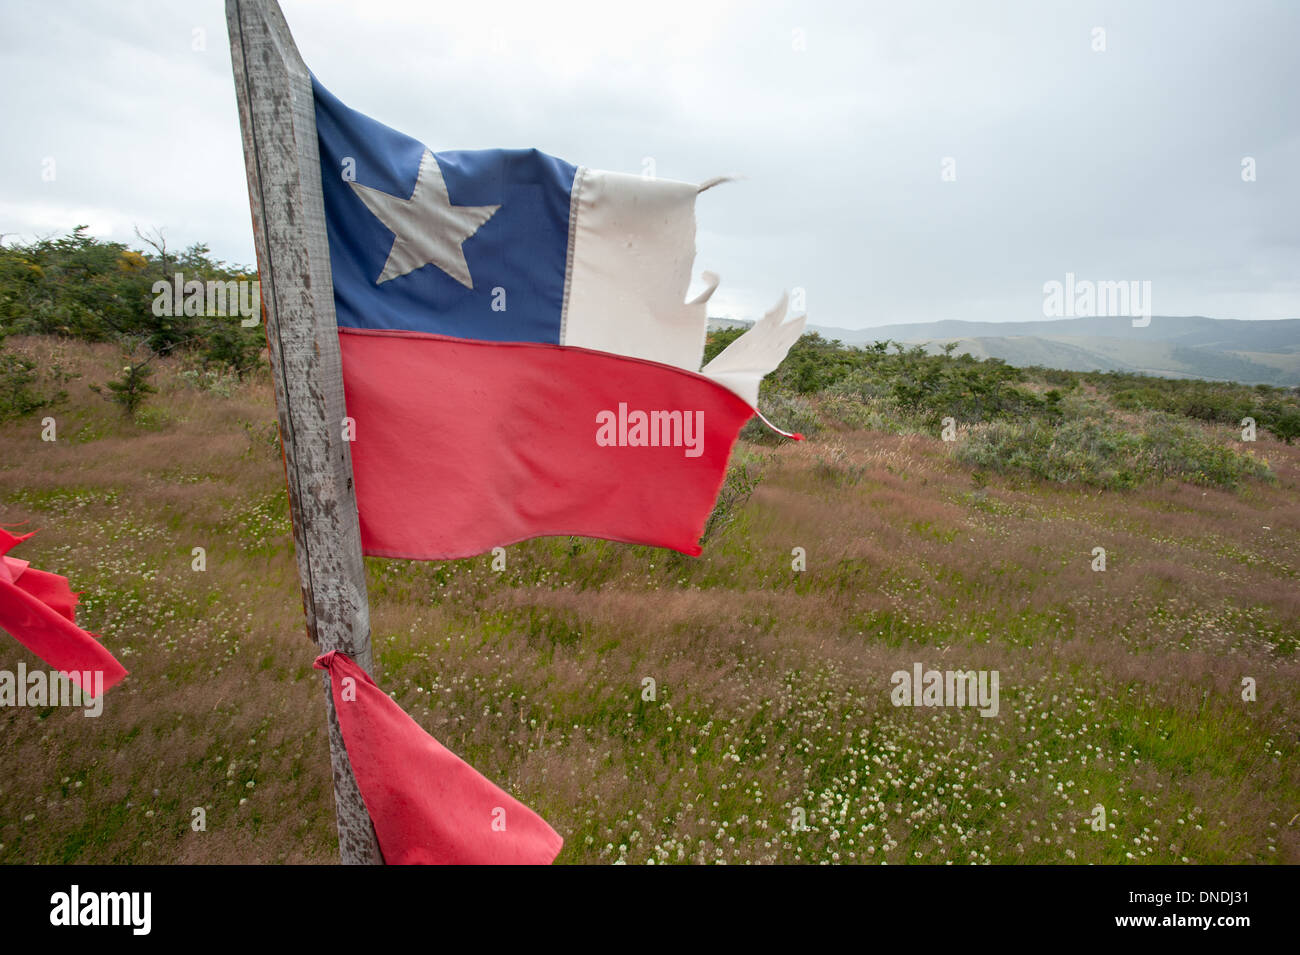 Rio Verde, torn flag, Chile Stock Photo